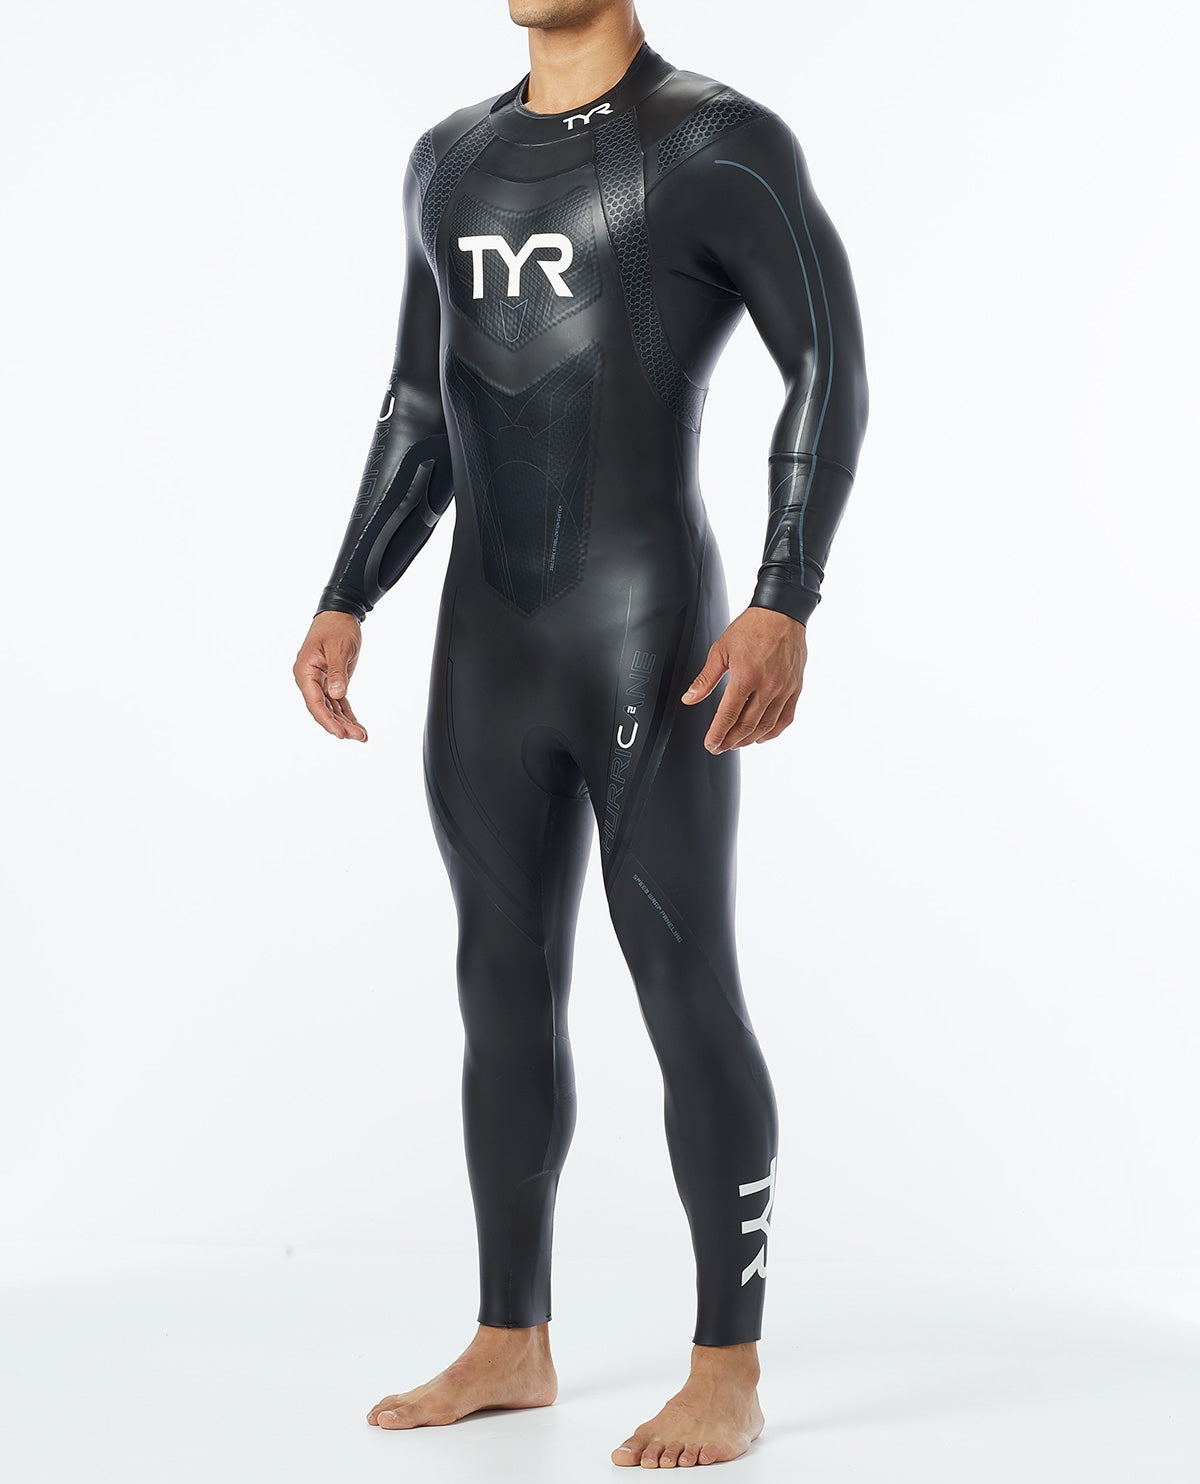 TYR Mens Hurricane Category 2 Triathlon/Swimming Wetsuit